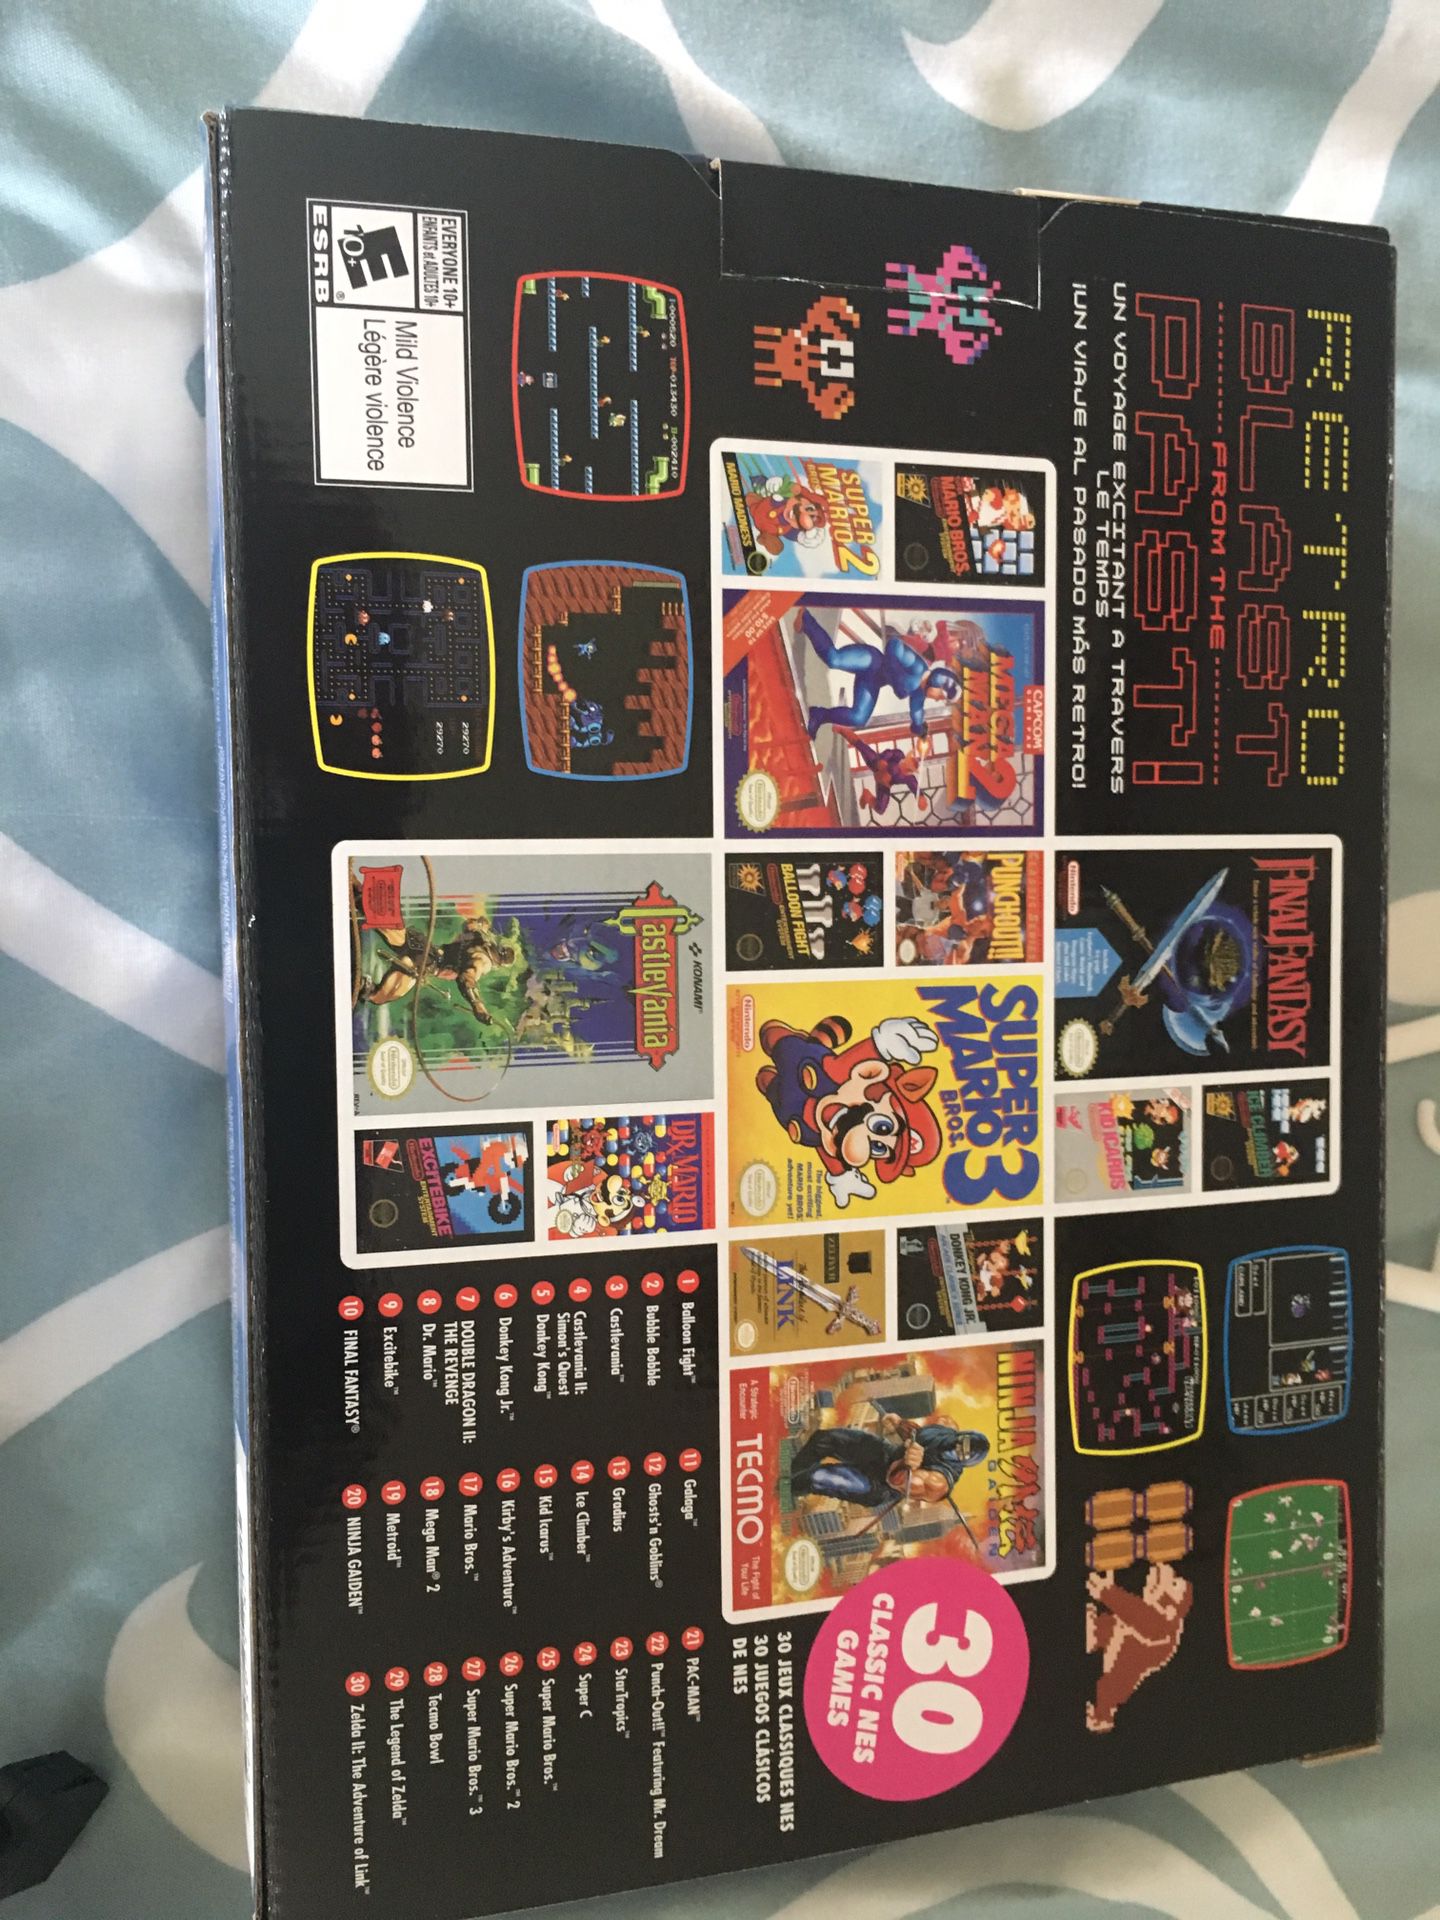 Mini NES classic edition system